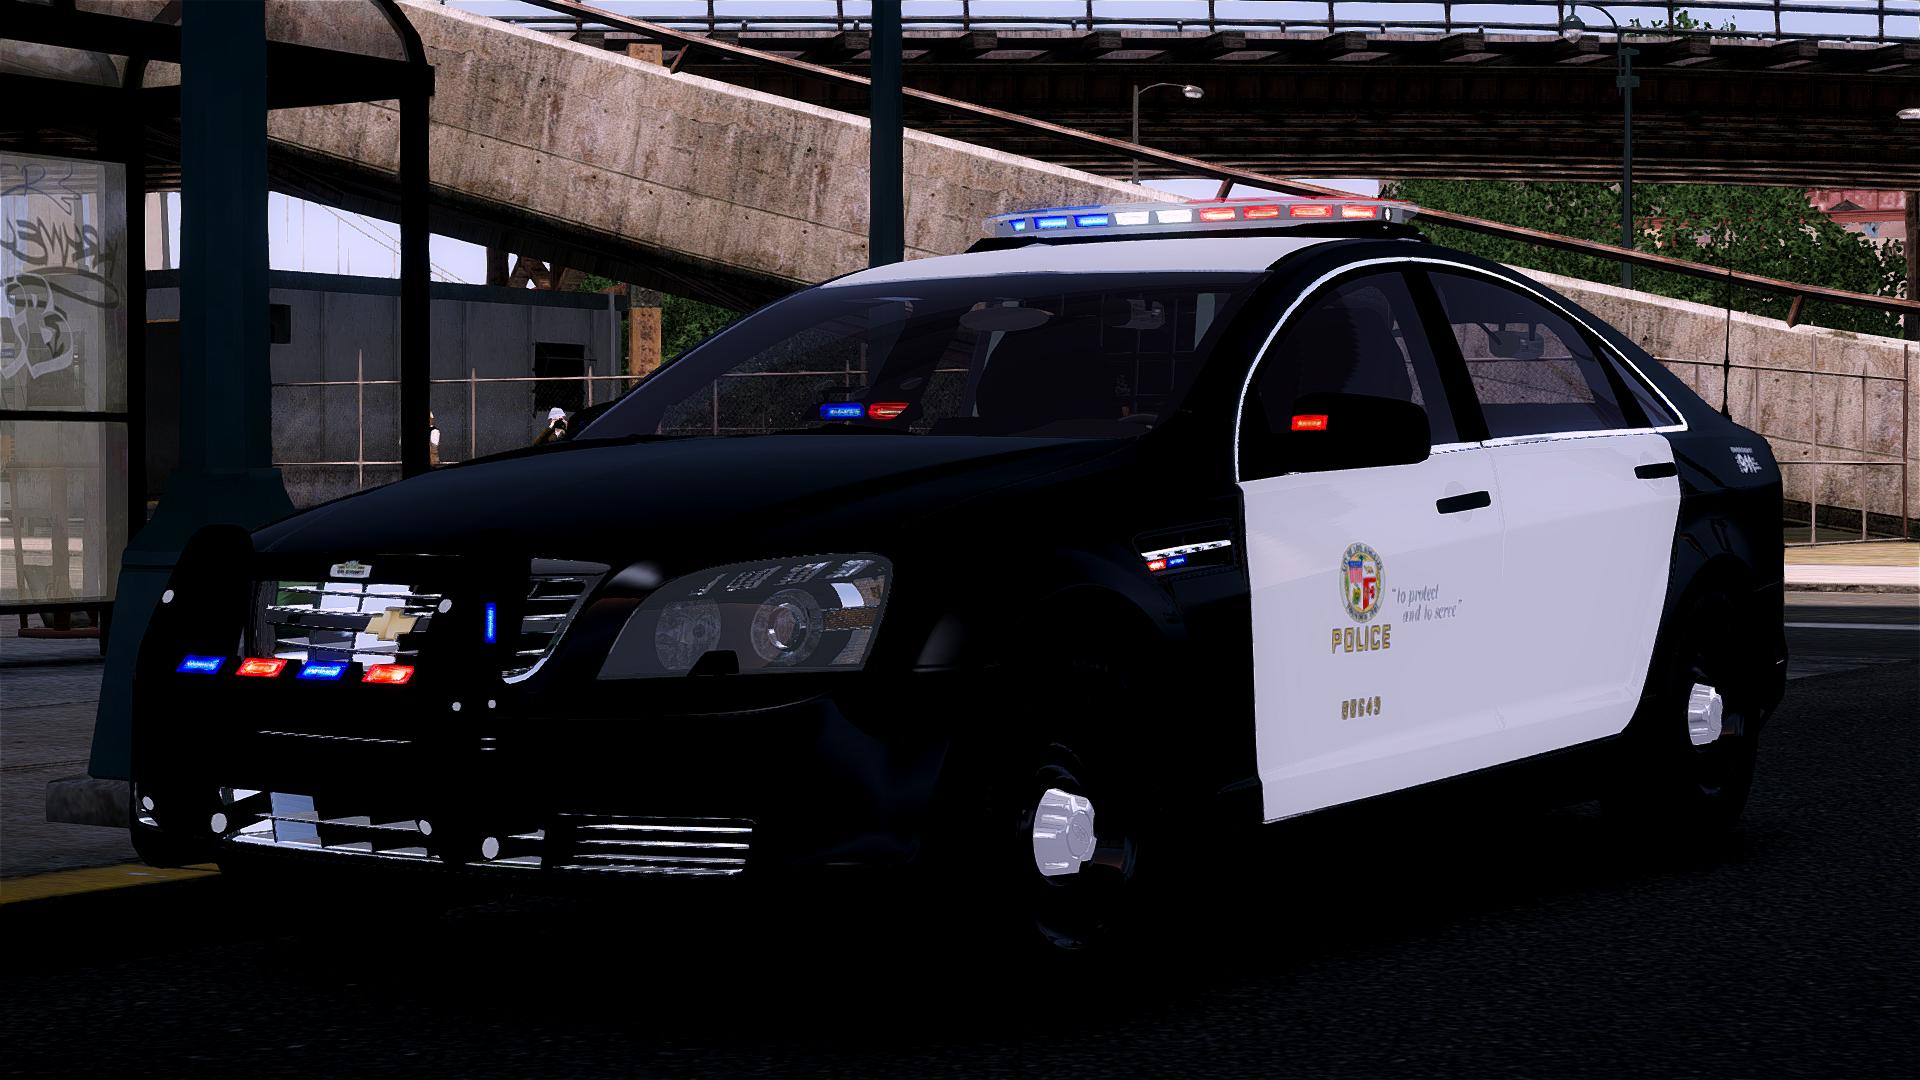 LAPD and LASD Skins for 2013 Chevrolet Caprice - GTA4 Mods.com